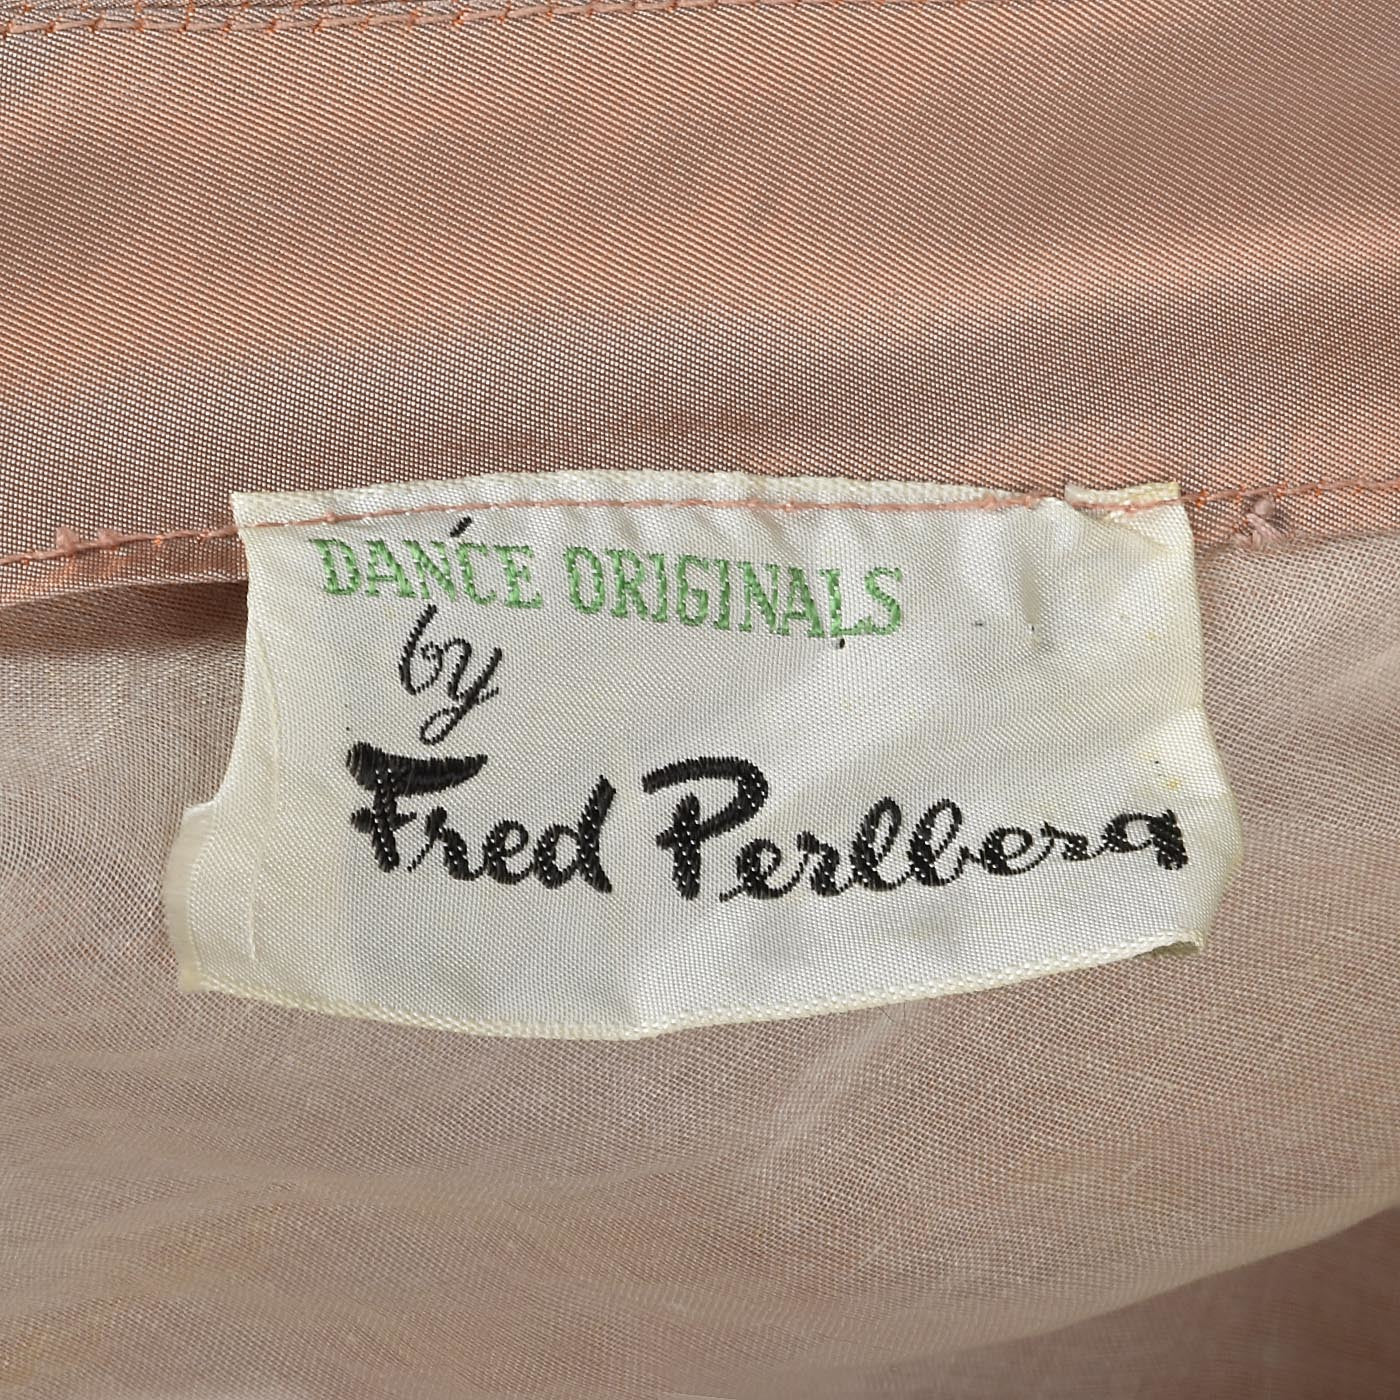 1950s Fred Perlberg Formal Princess Dress